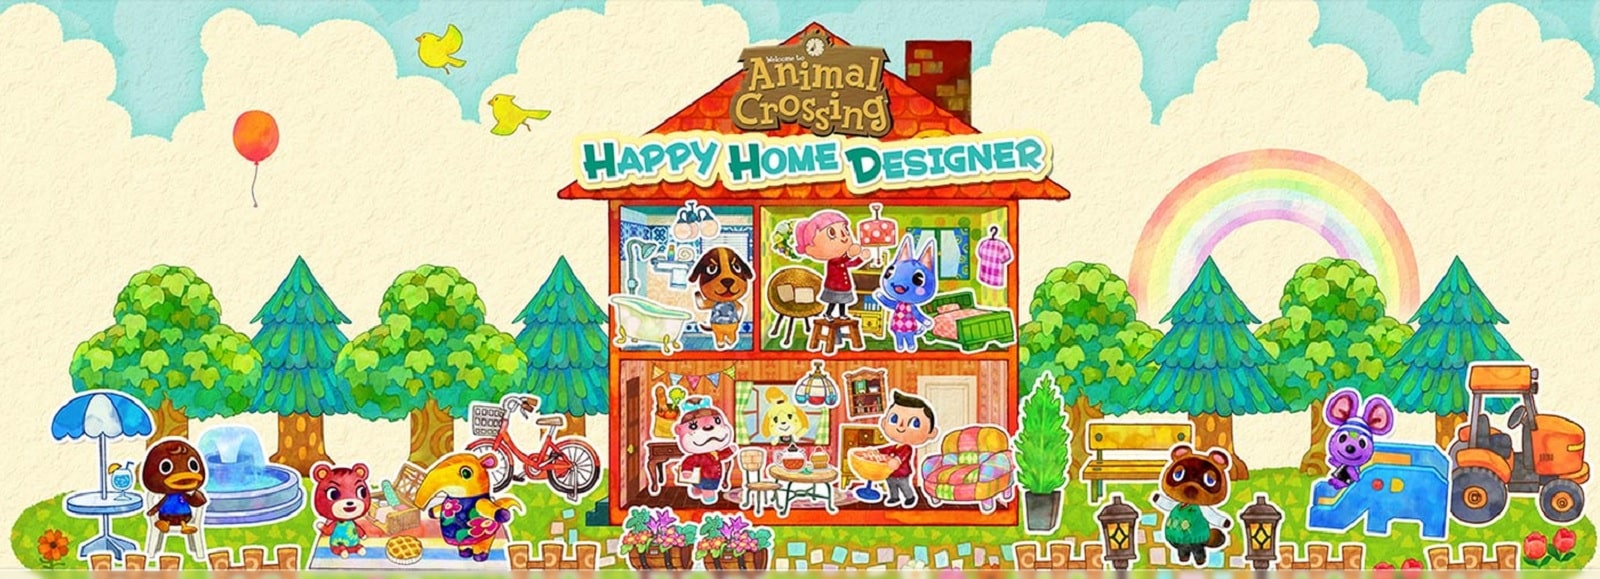 Animal Crossing Happy Home Designer 3DS Artwork Official Nintendo